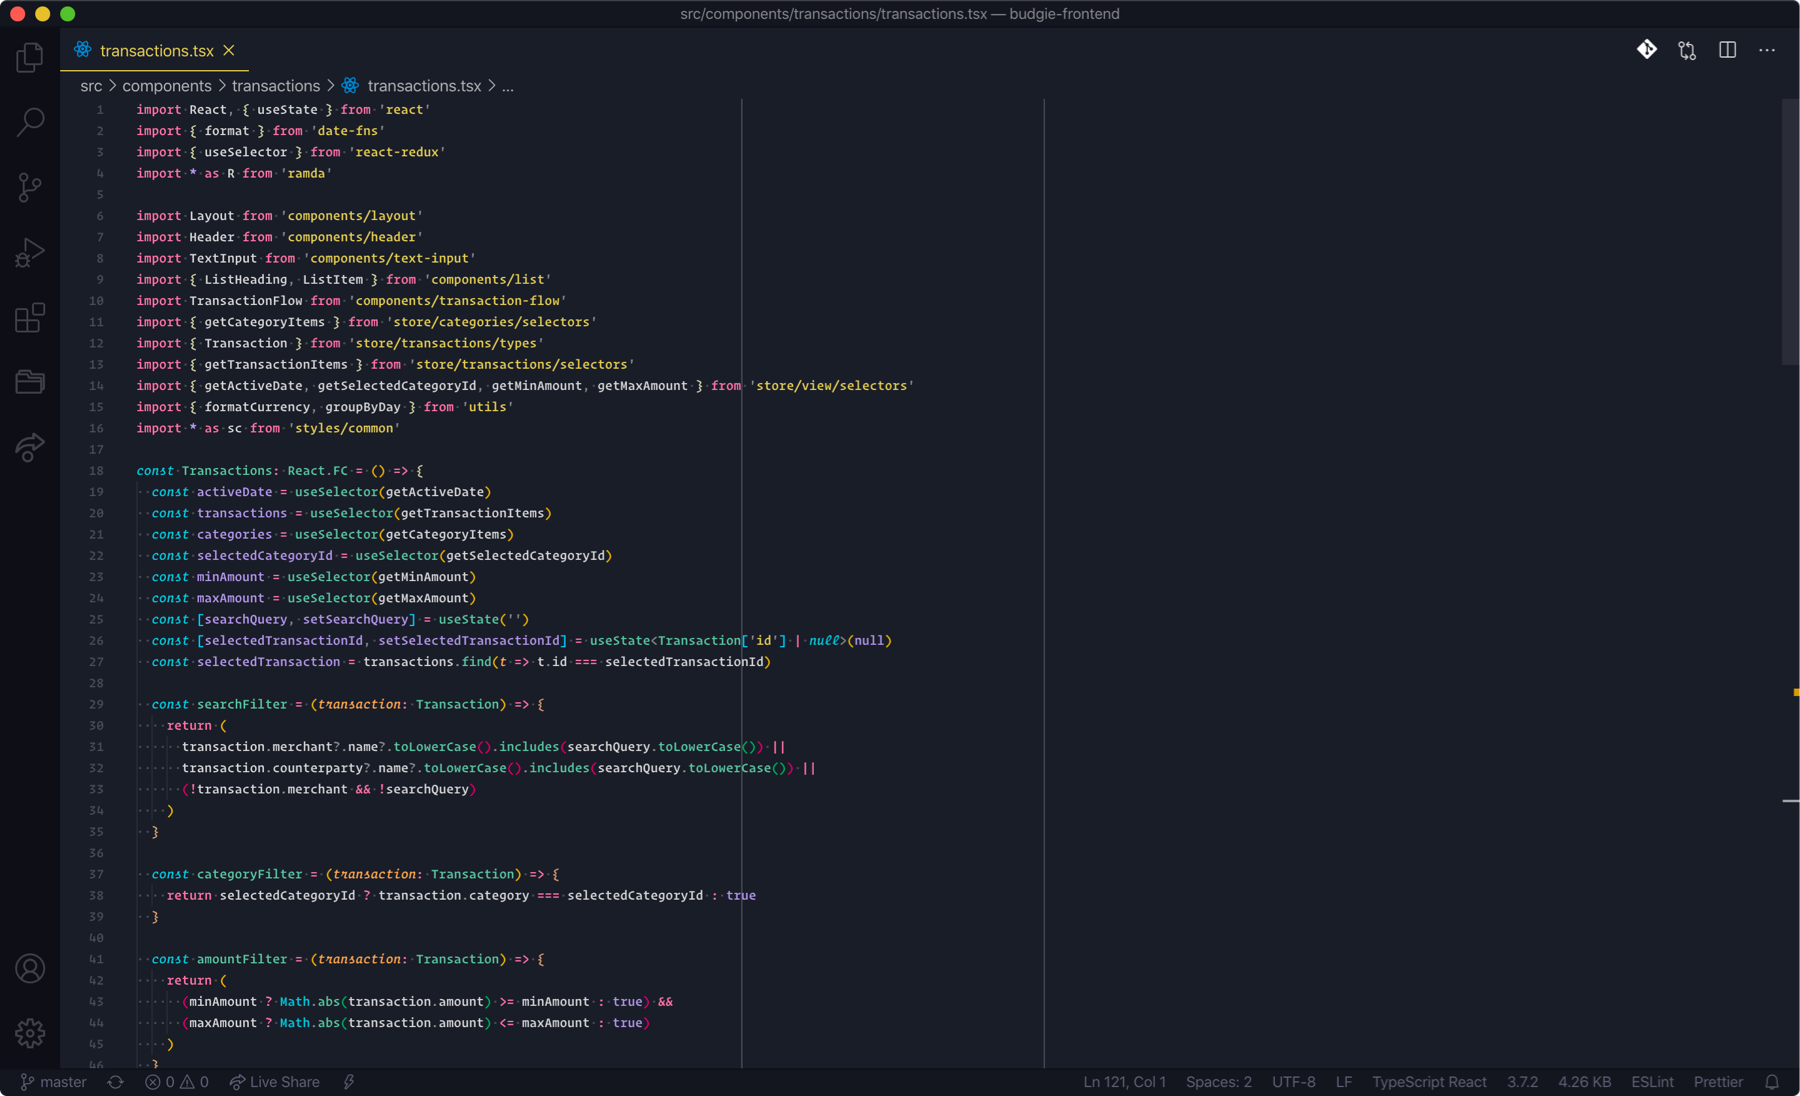 Visual Studio Code screenshot